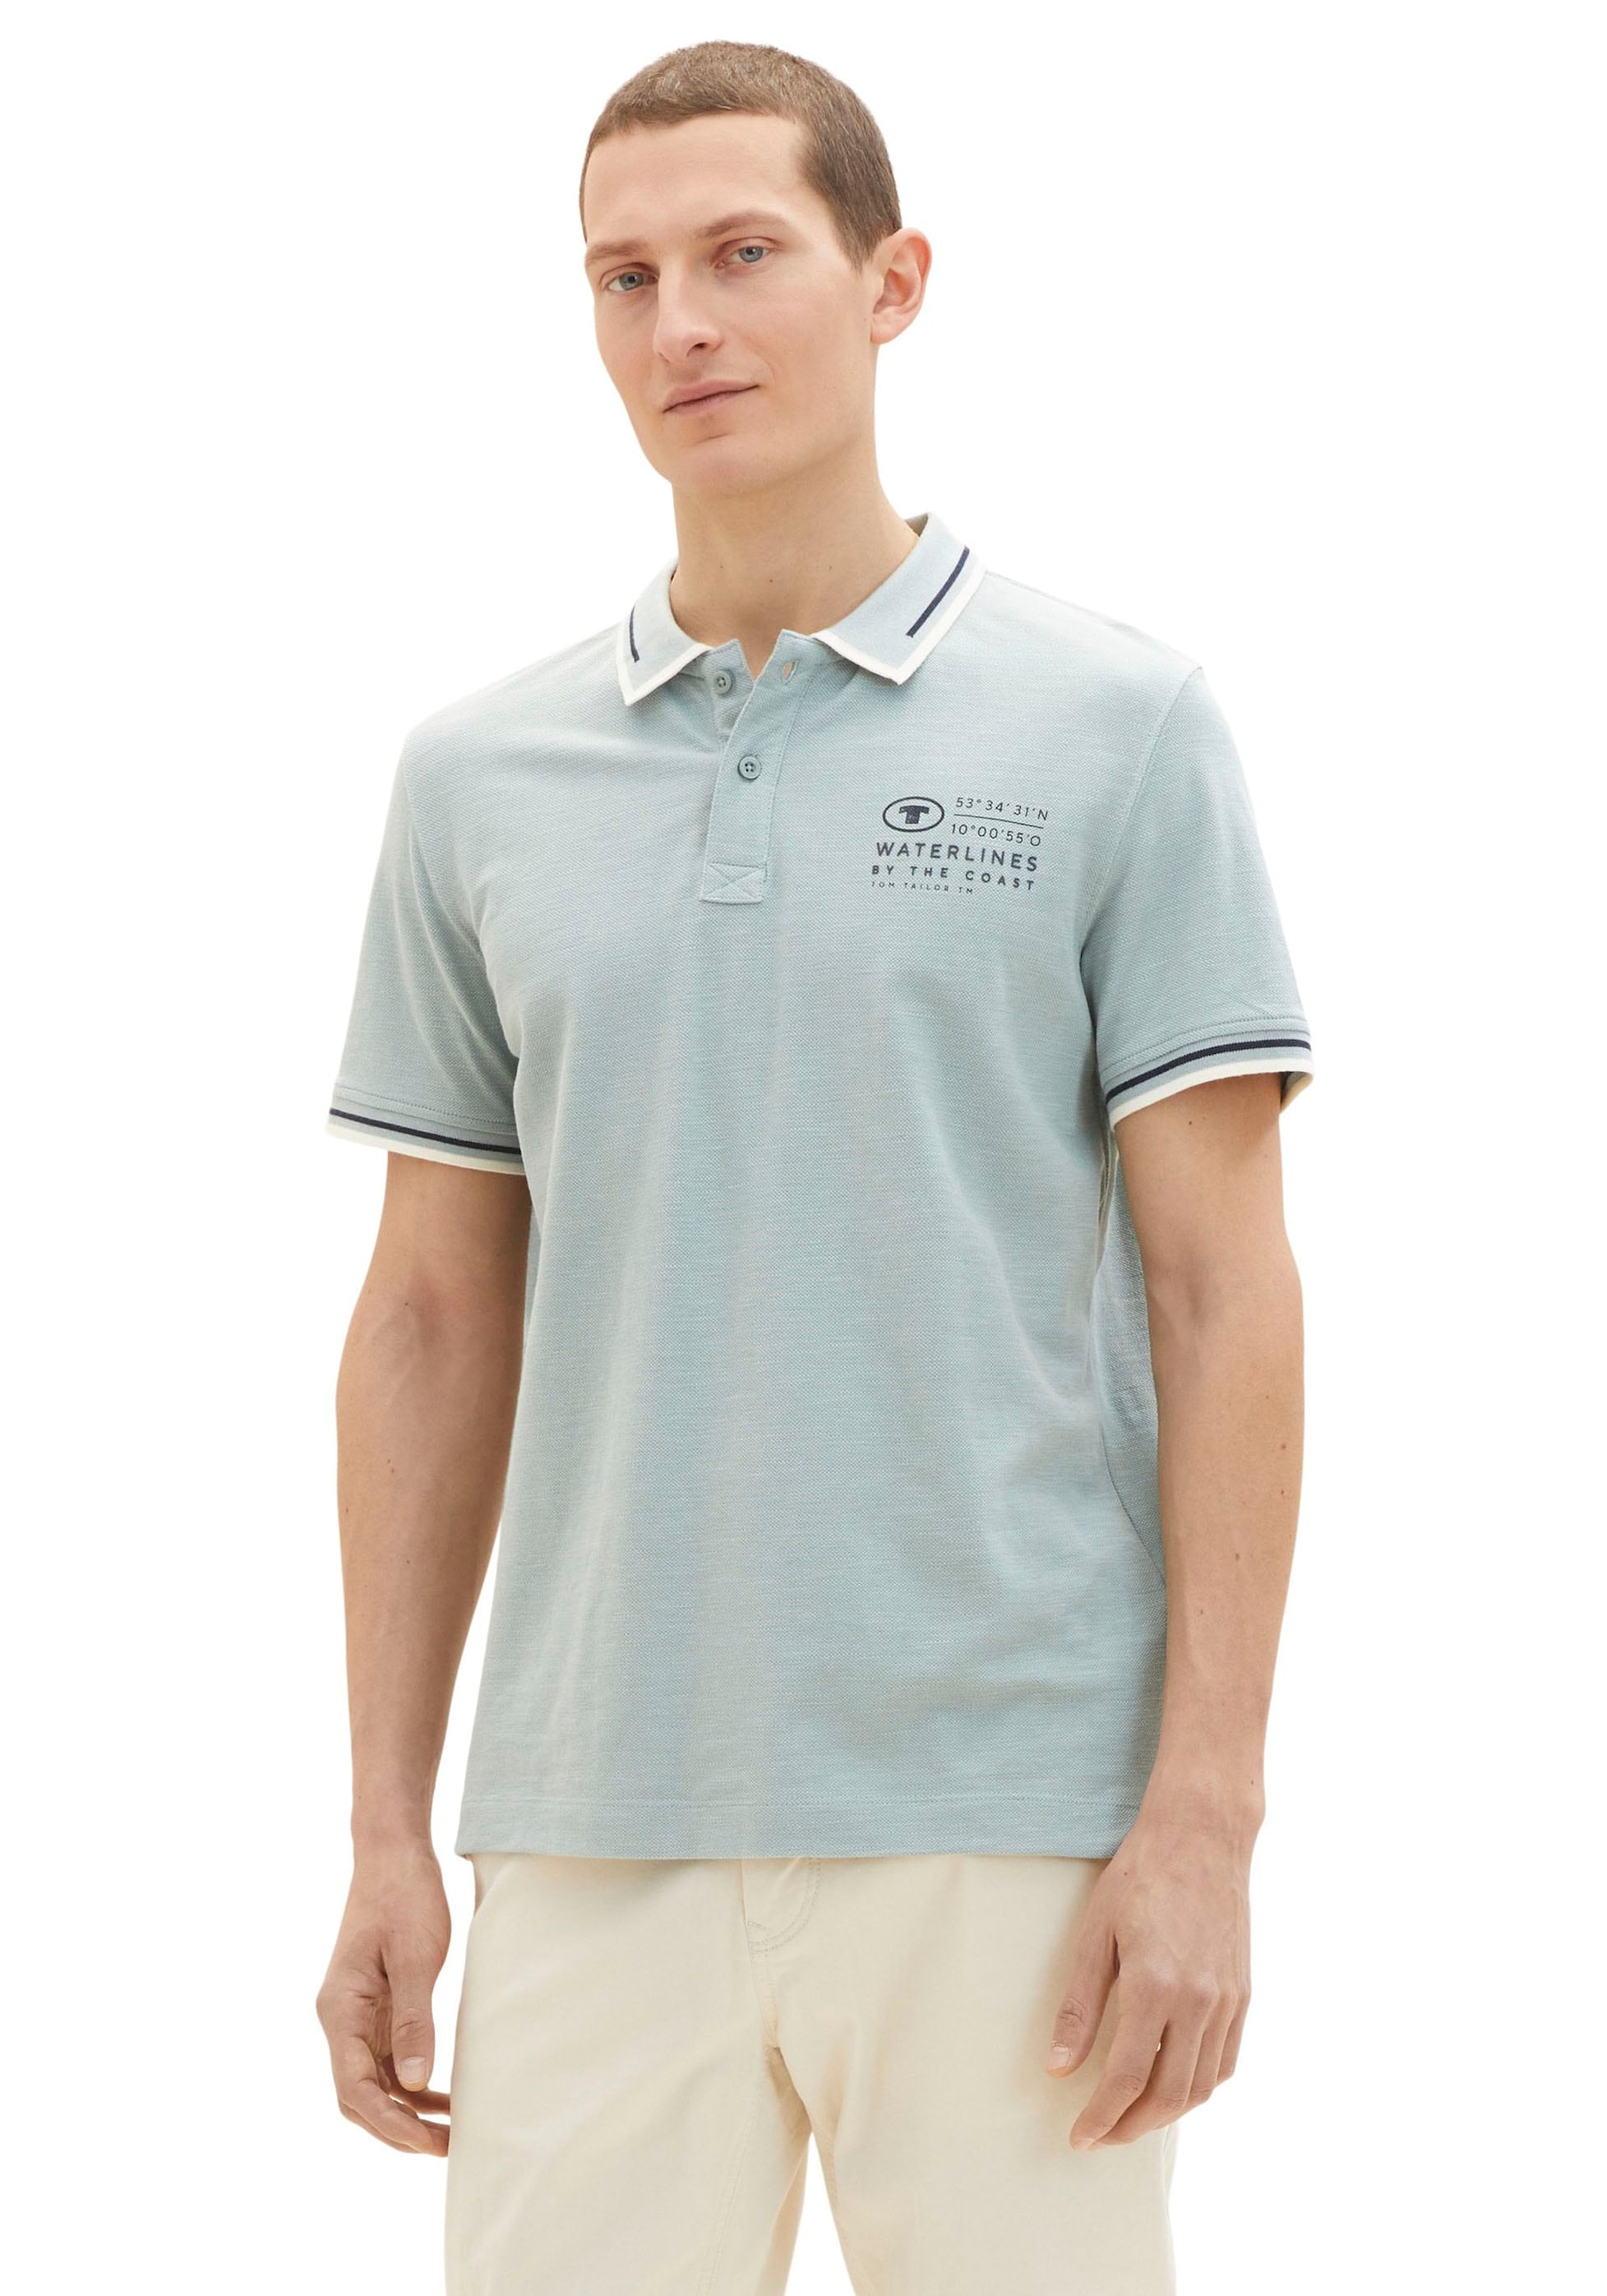 TOM TAILOR Poloshirt, mit Logoschriftzug online kaufen bei OTTO